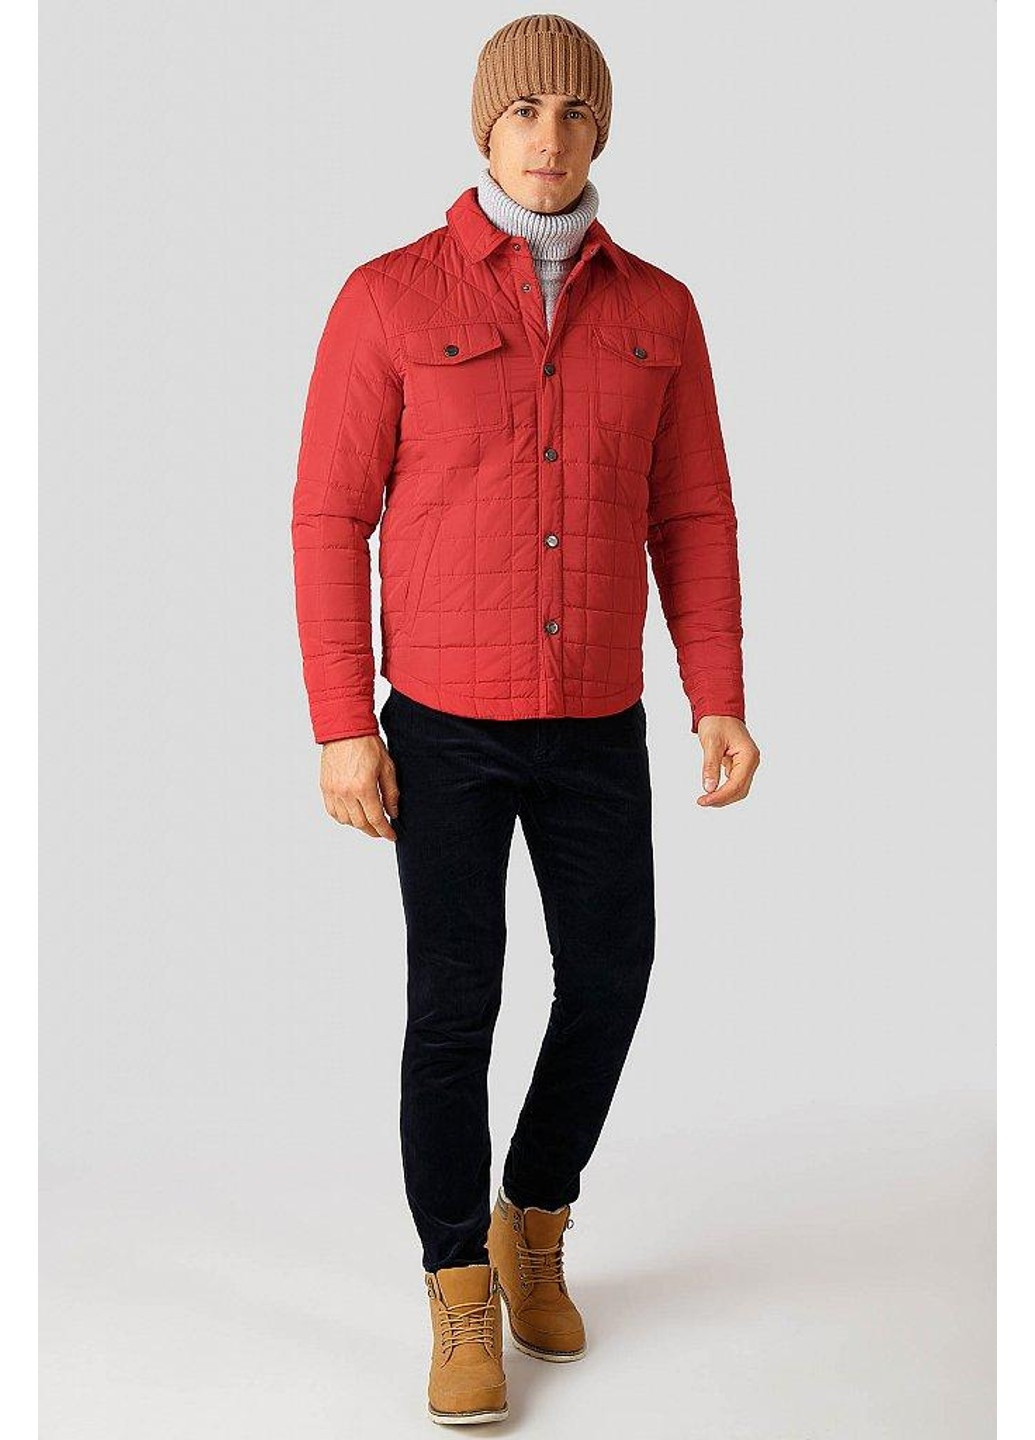 Красная демисезонная куртка-рубашка a18-22020-101 Finn Flare